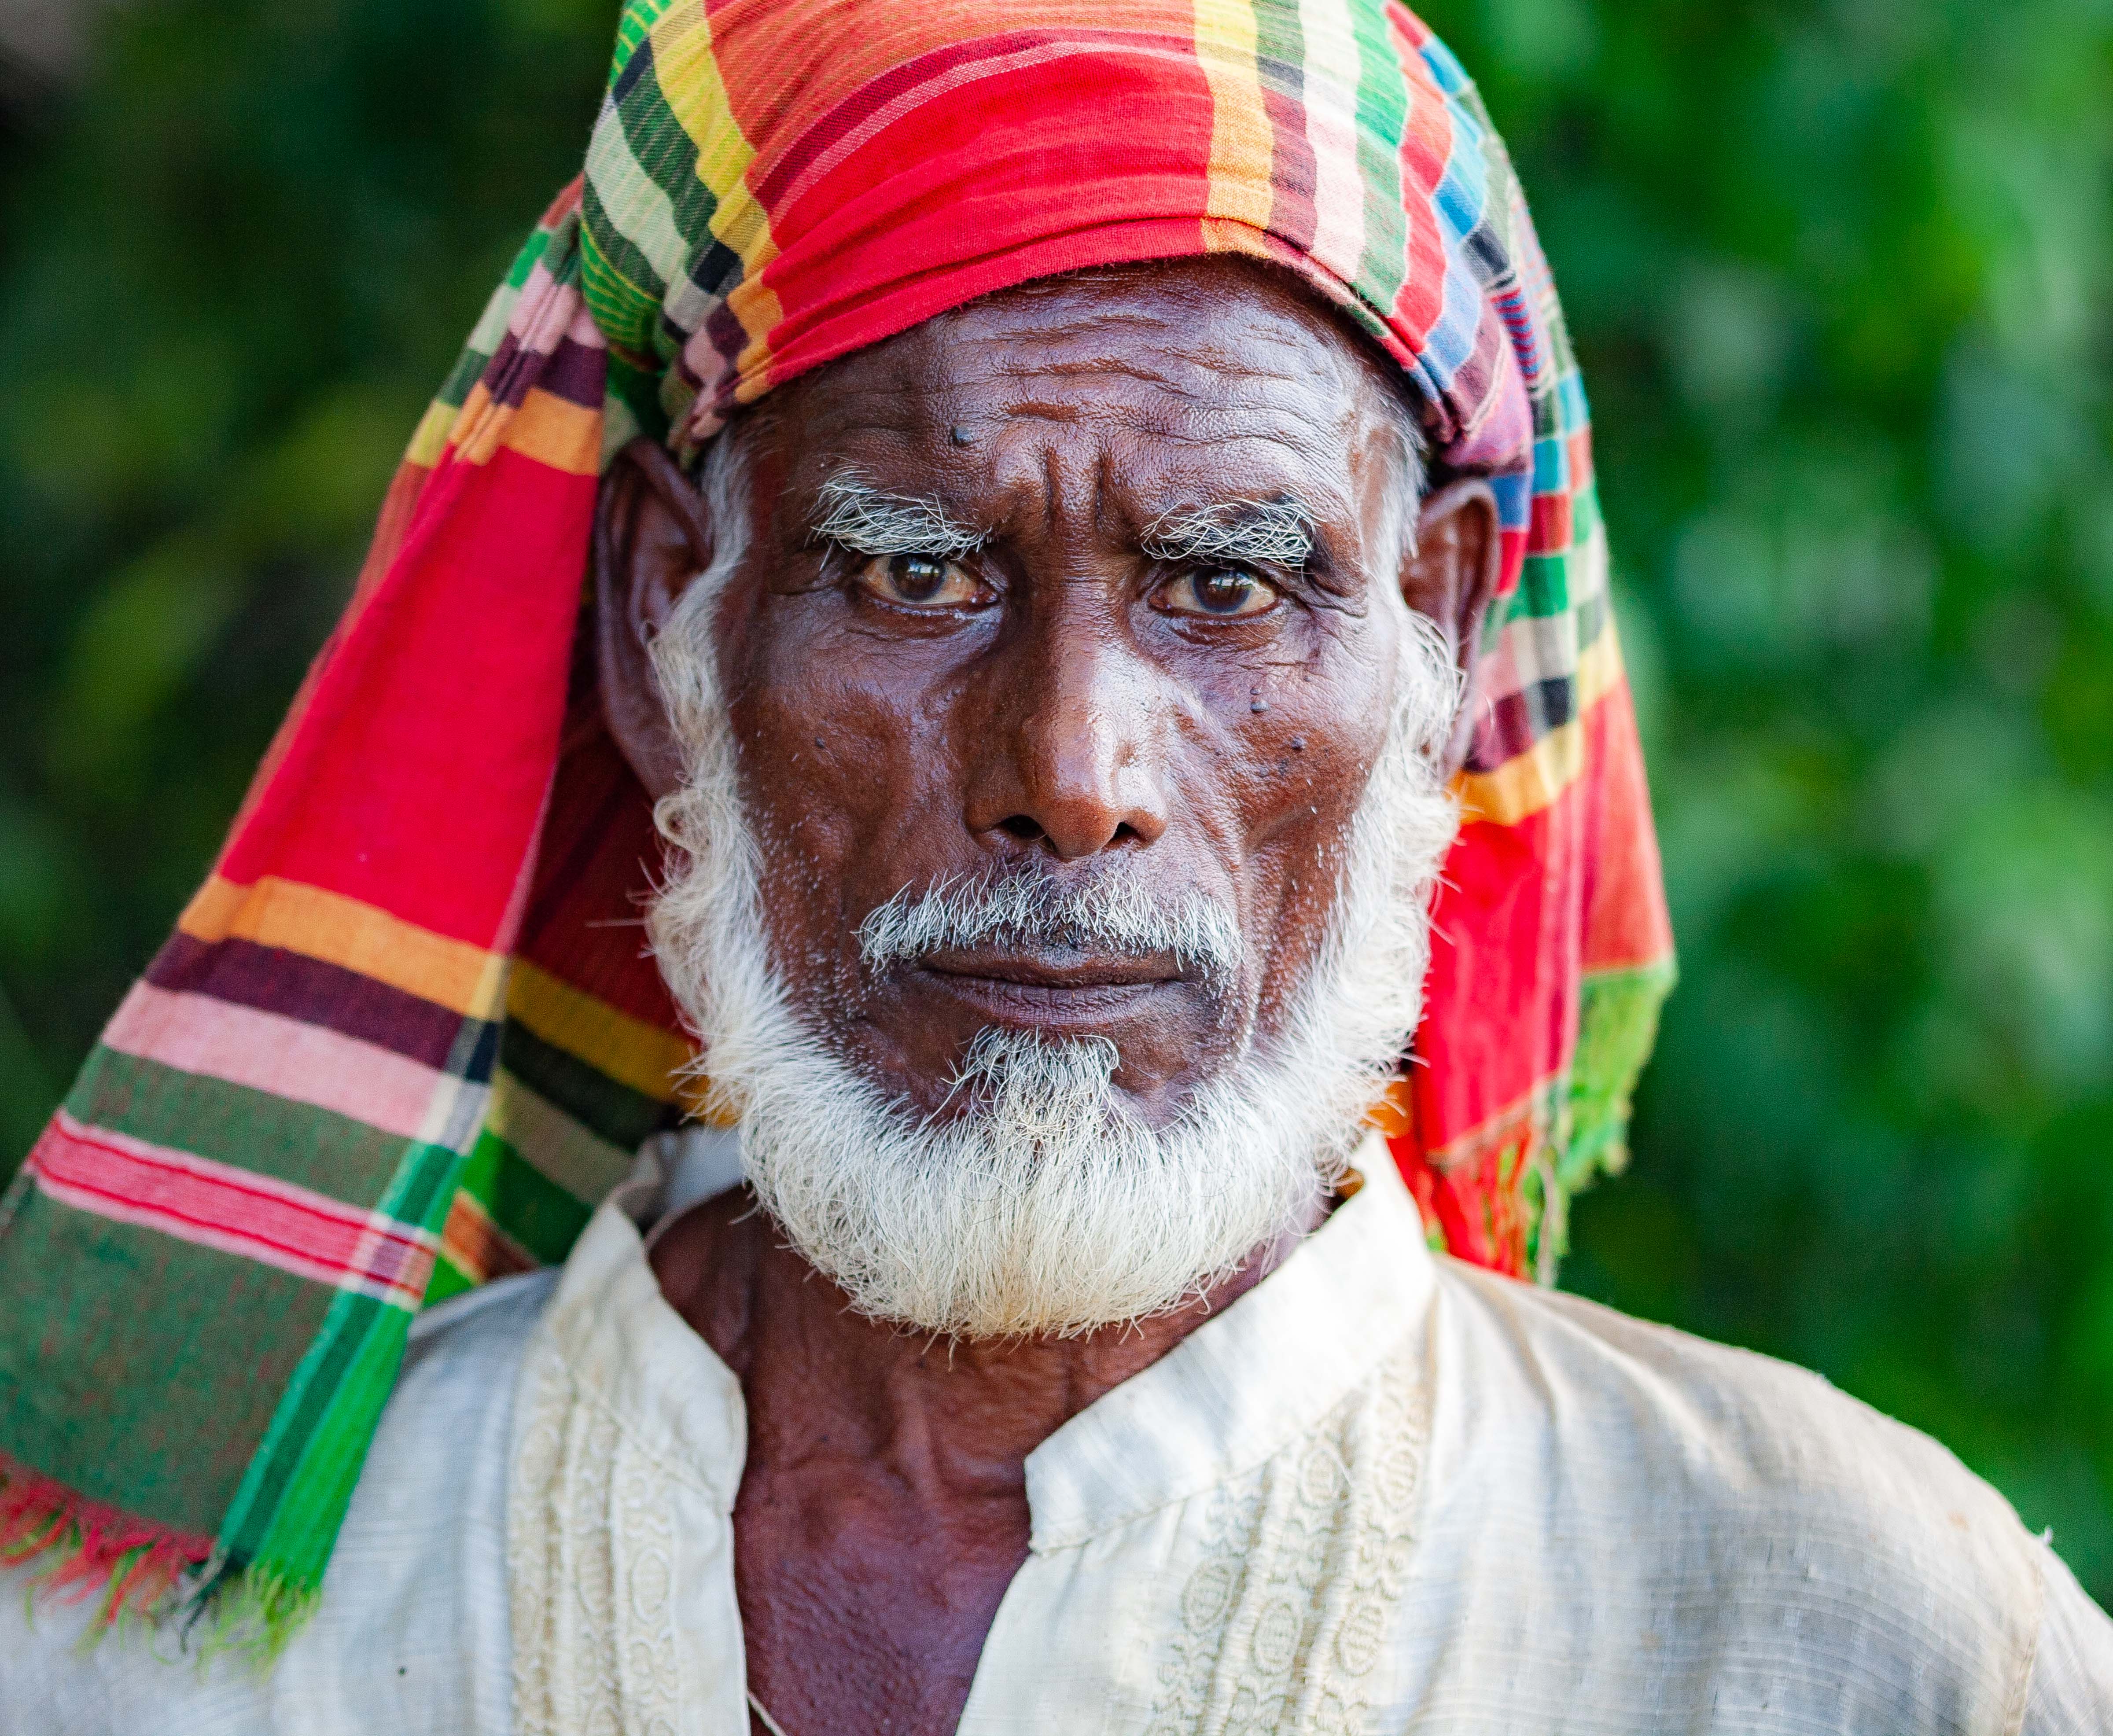 Bangladesh, Sherpur Prov, Colorful Old Man, 2009, IMG 8813